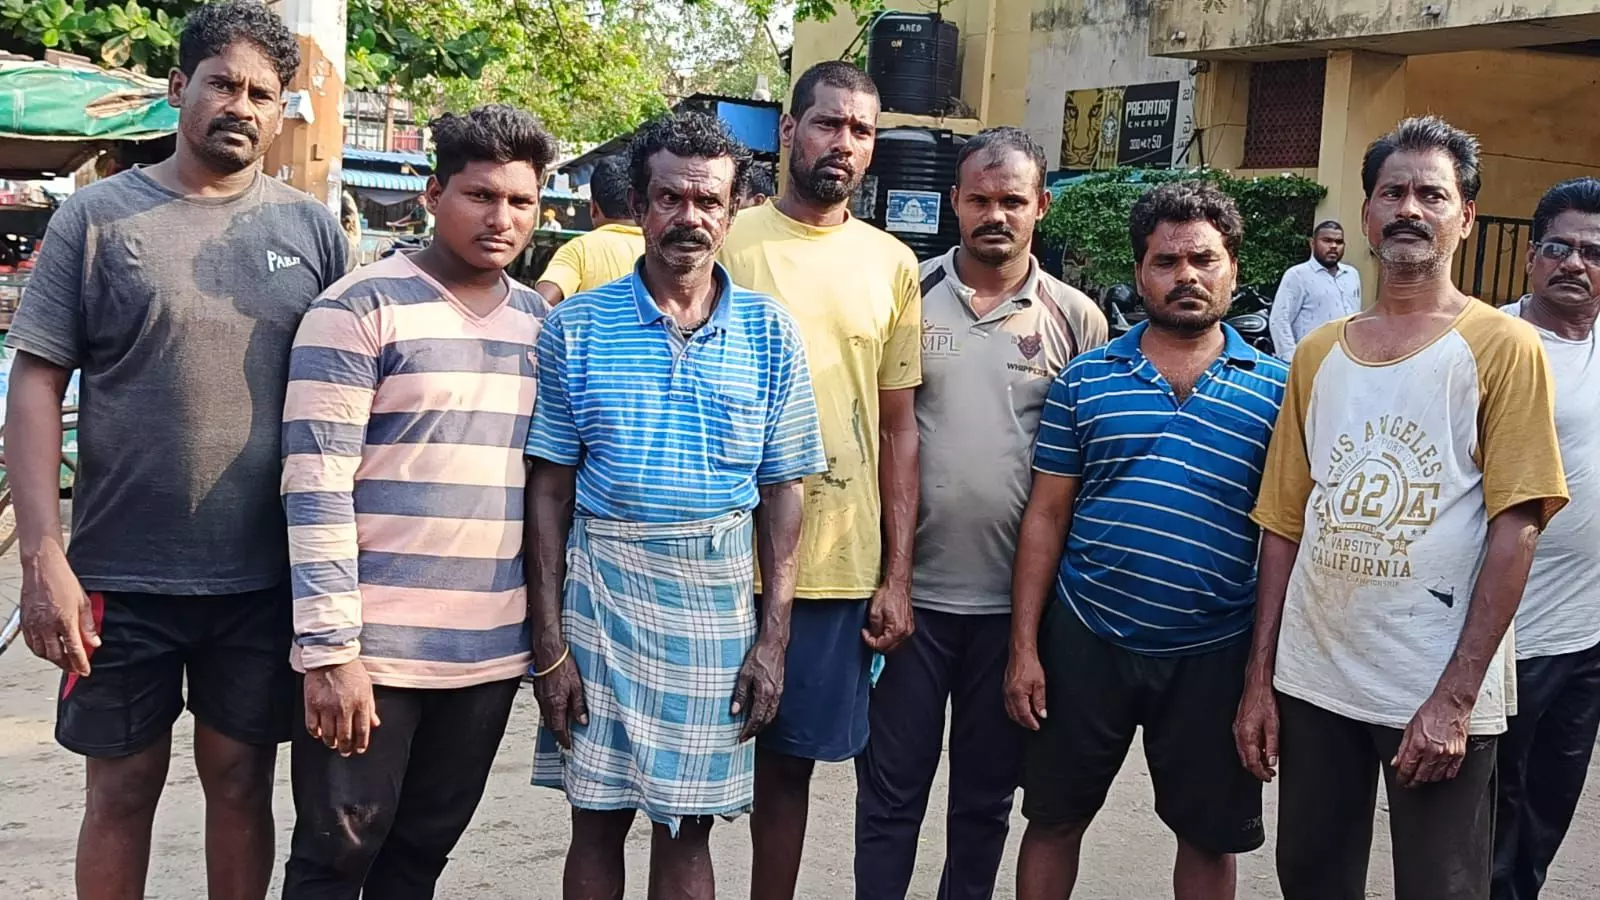 18 Indian fishermen arrested for alleged illegal fishing in Sri Lanka